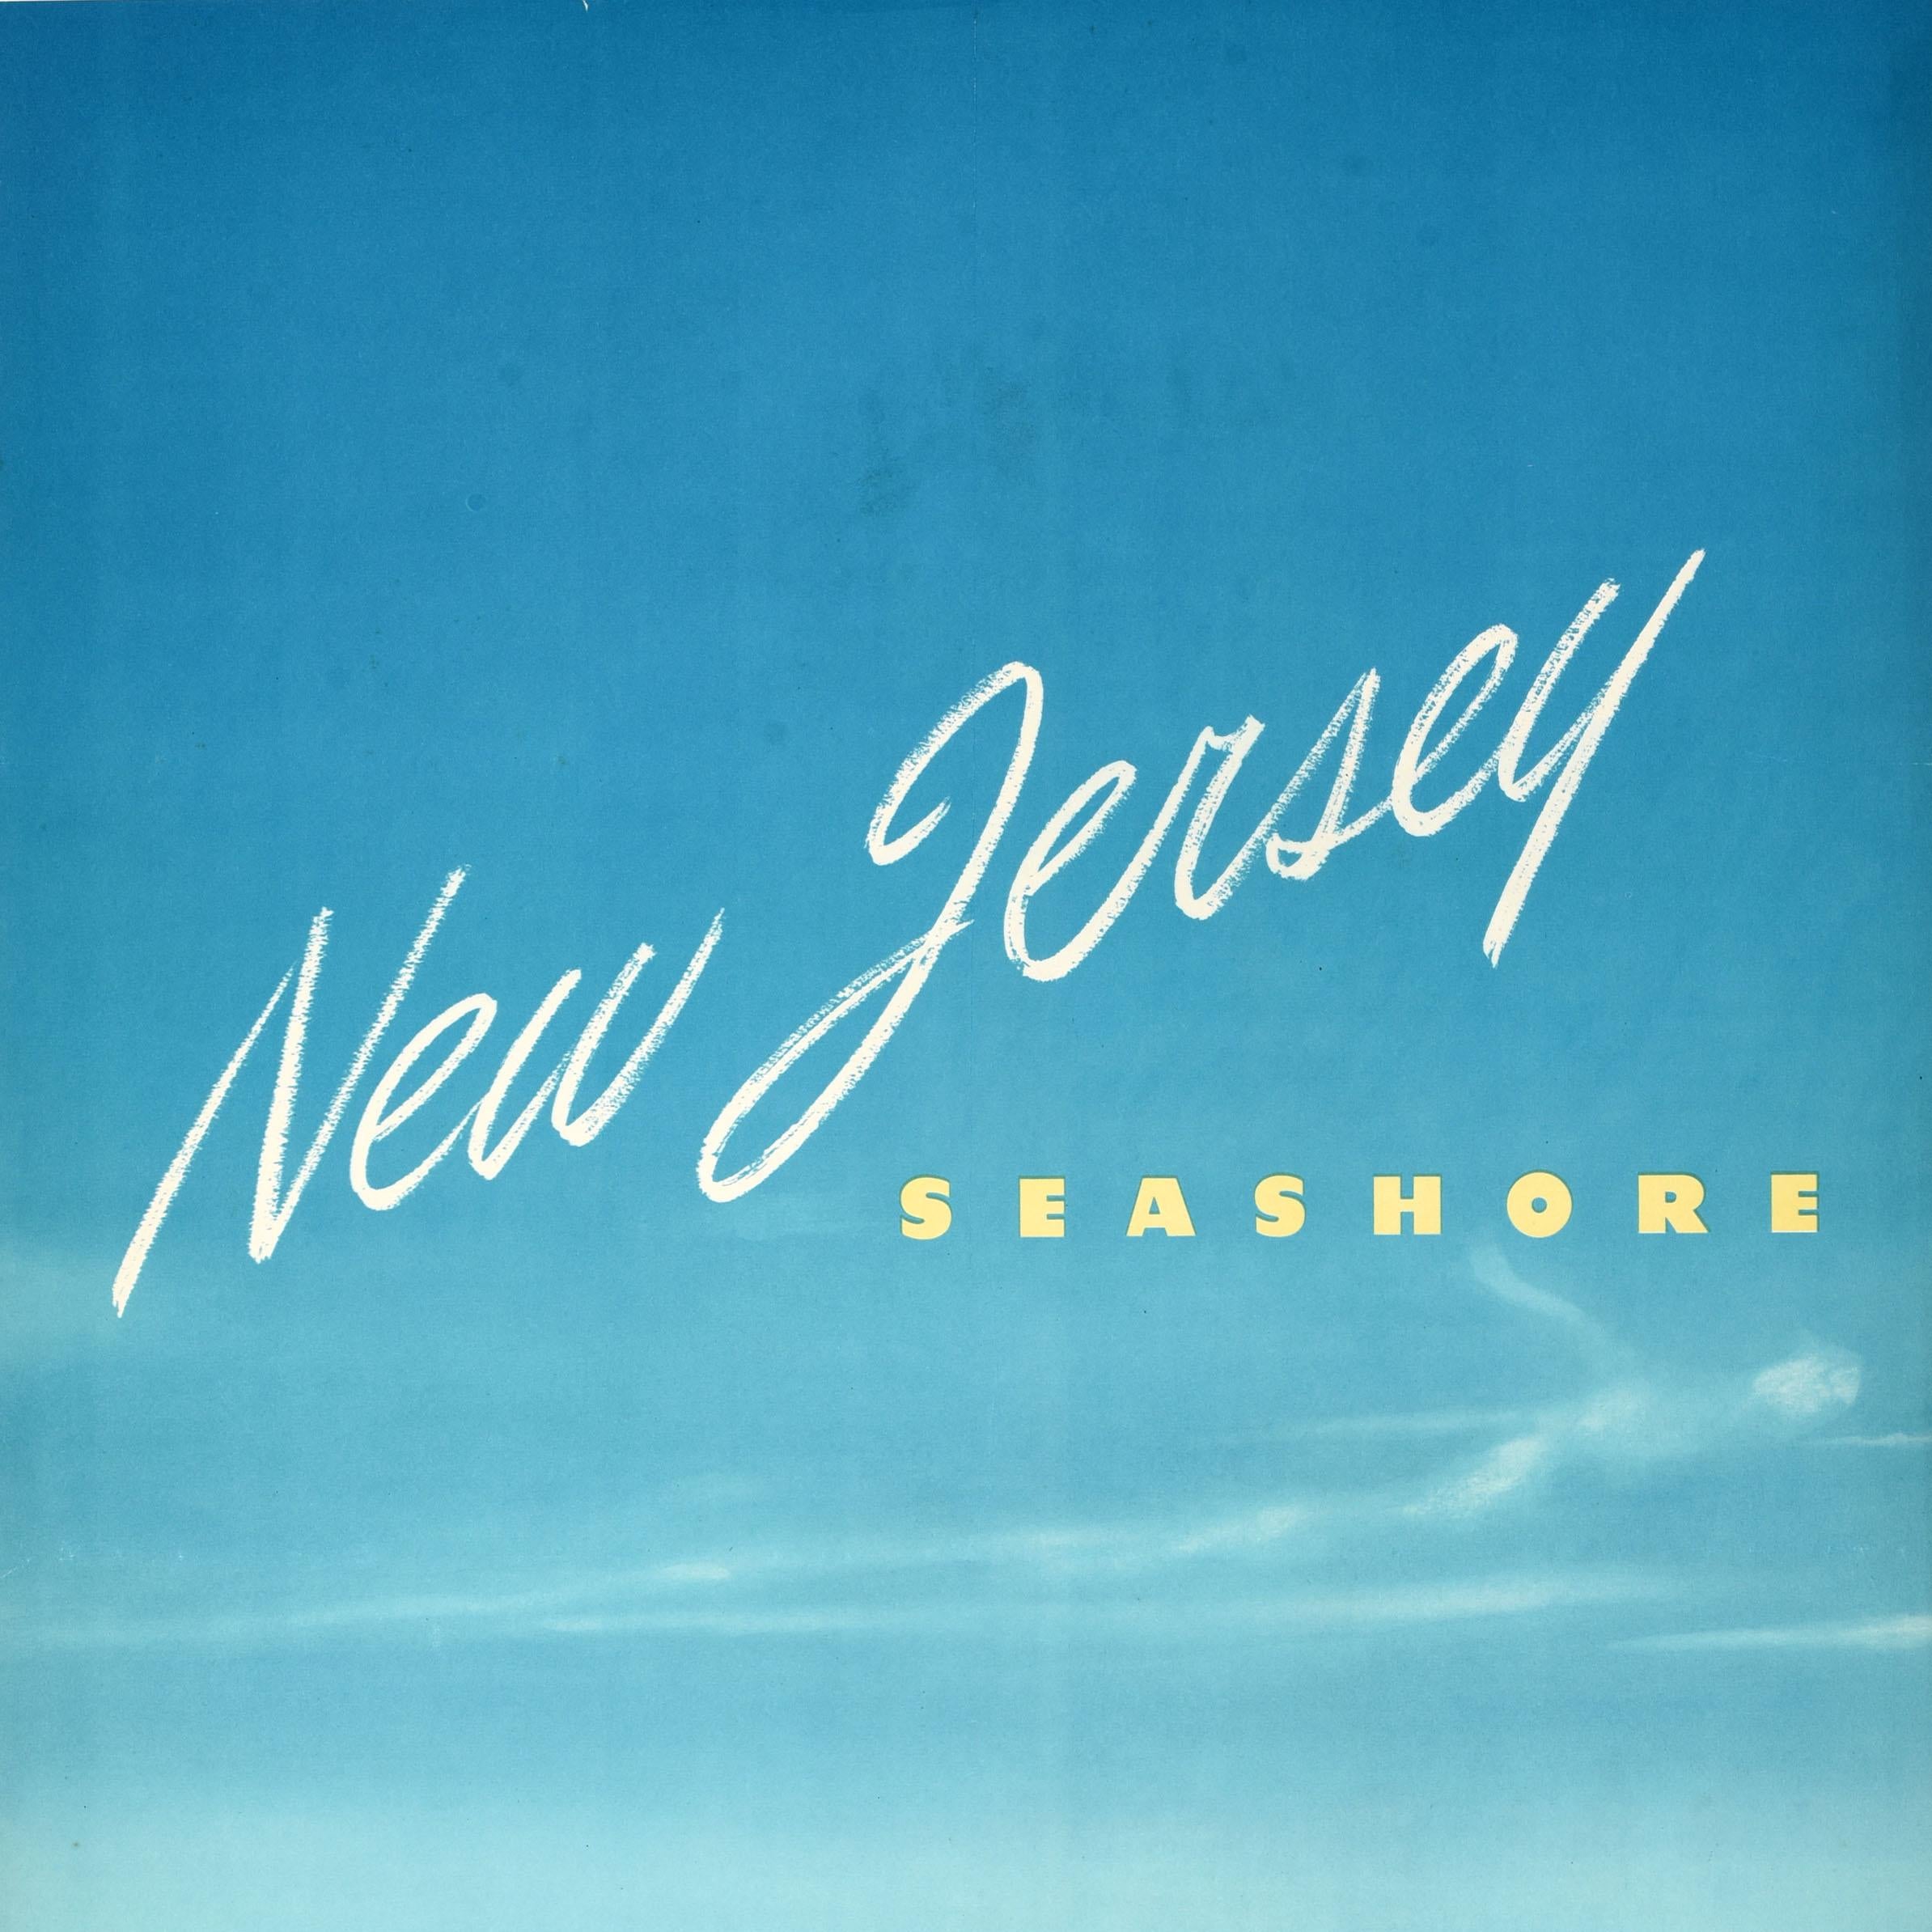 Original Vintage Travel Poster New Jersey Seashore Pennsylvania Railroad Beach - Print by Unknown